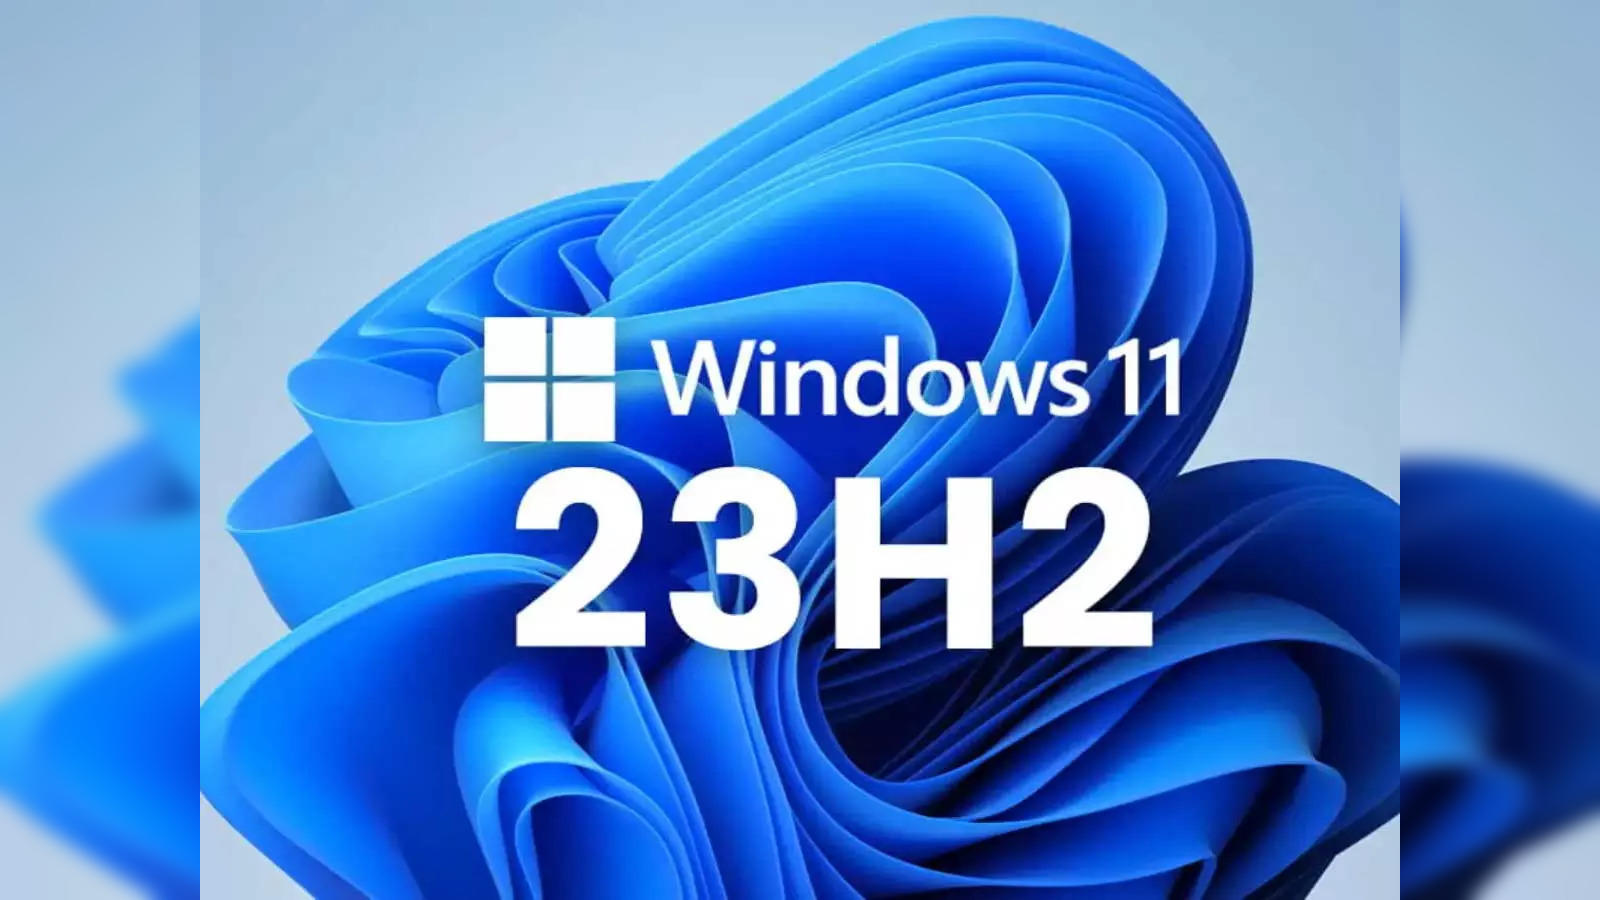 Windows 11 23H2 Update